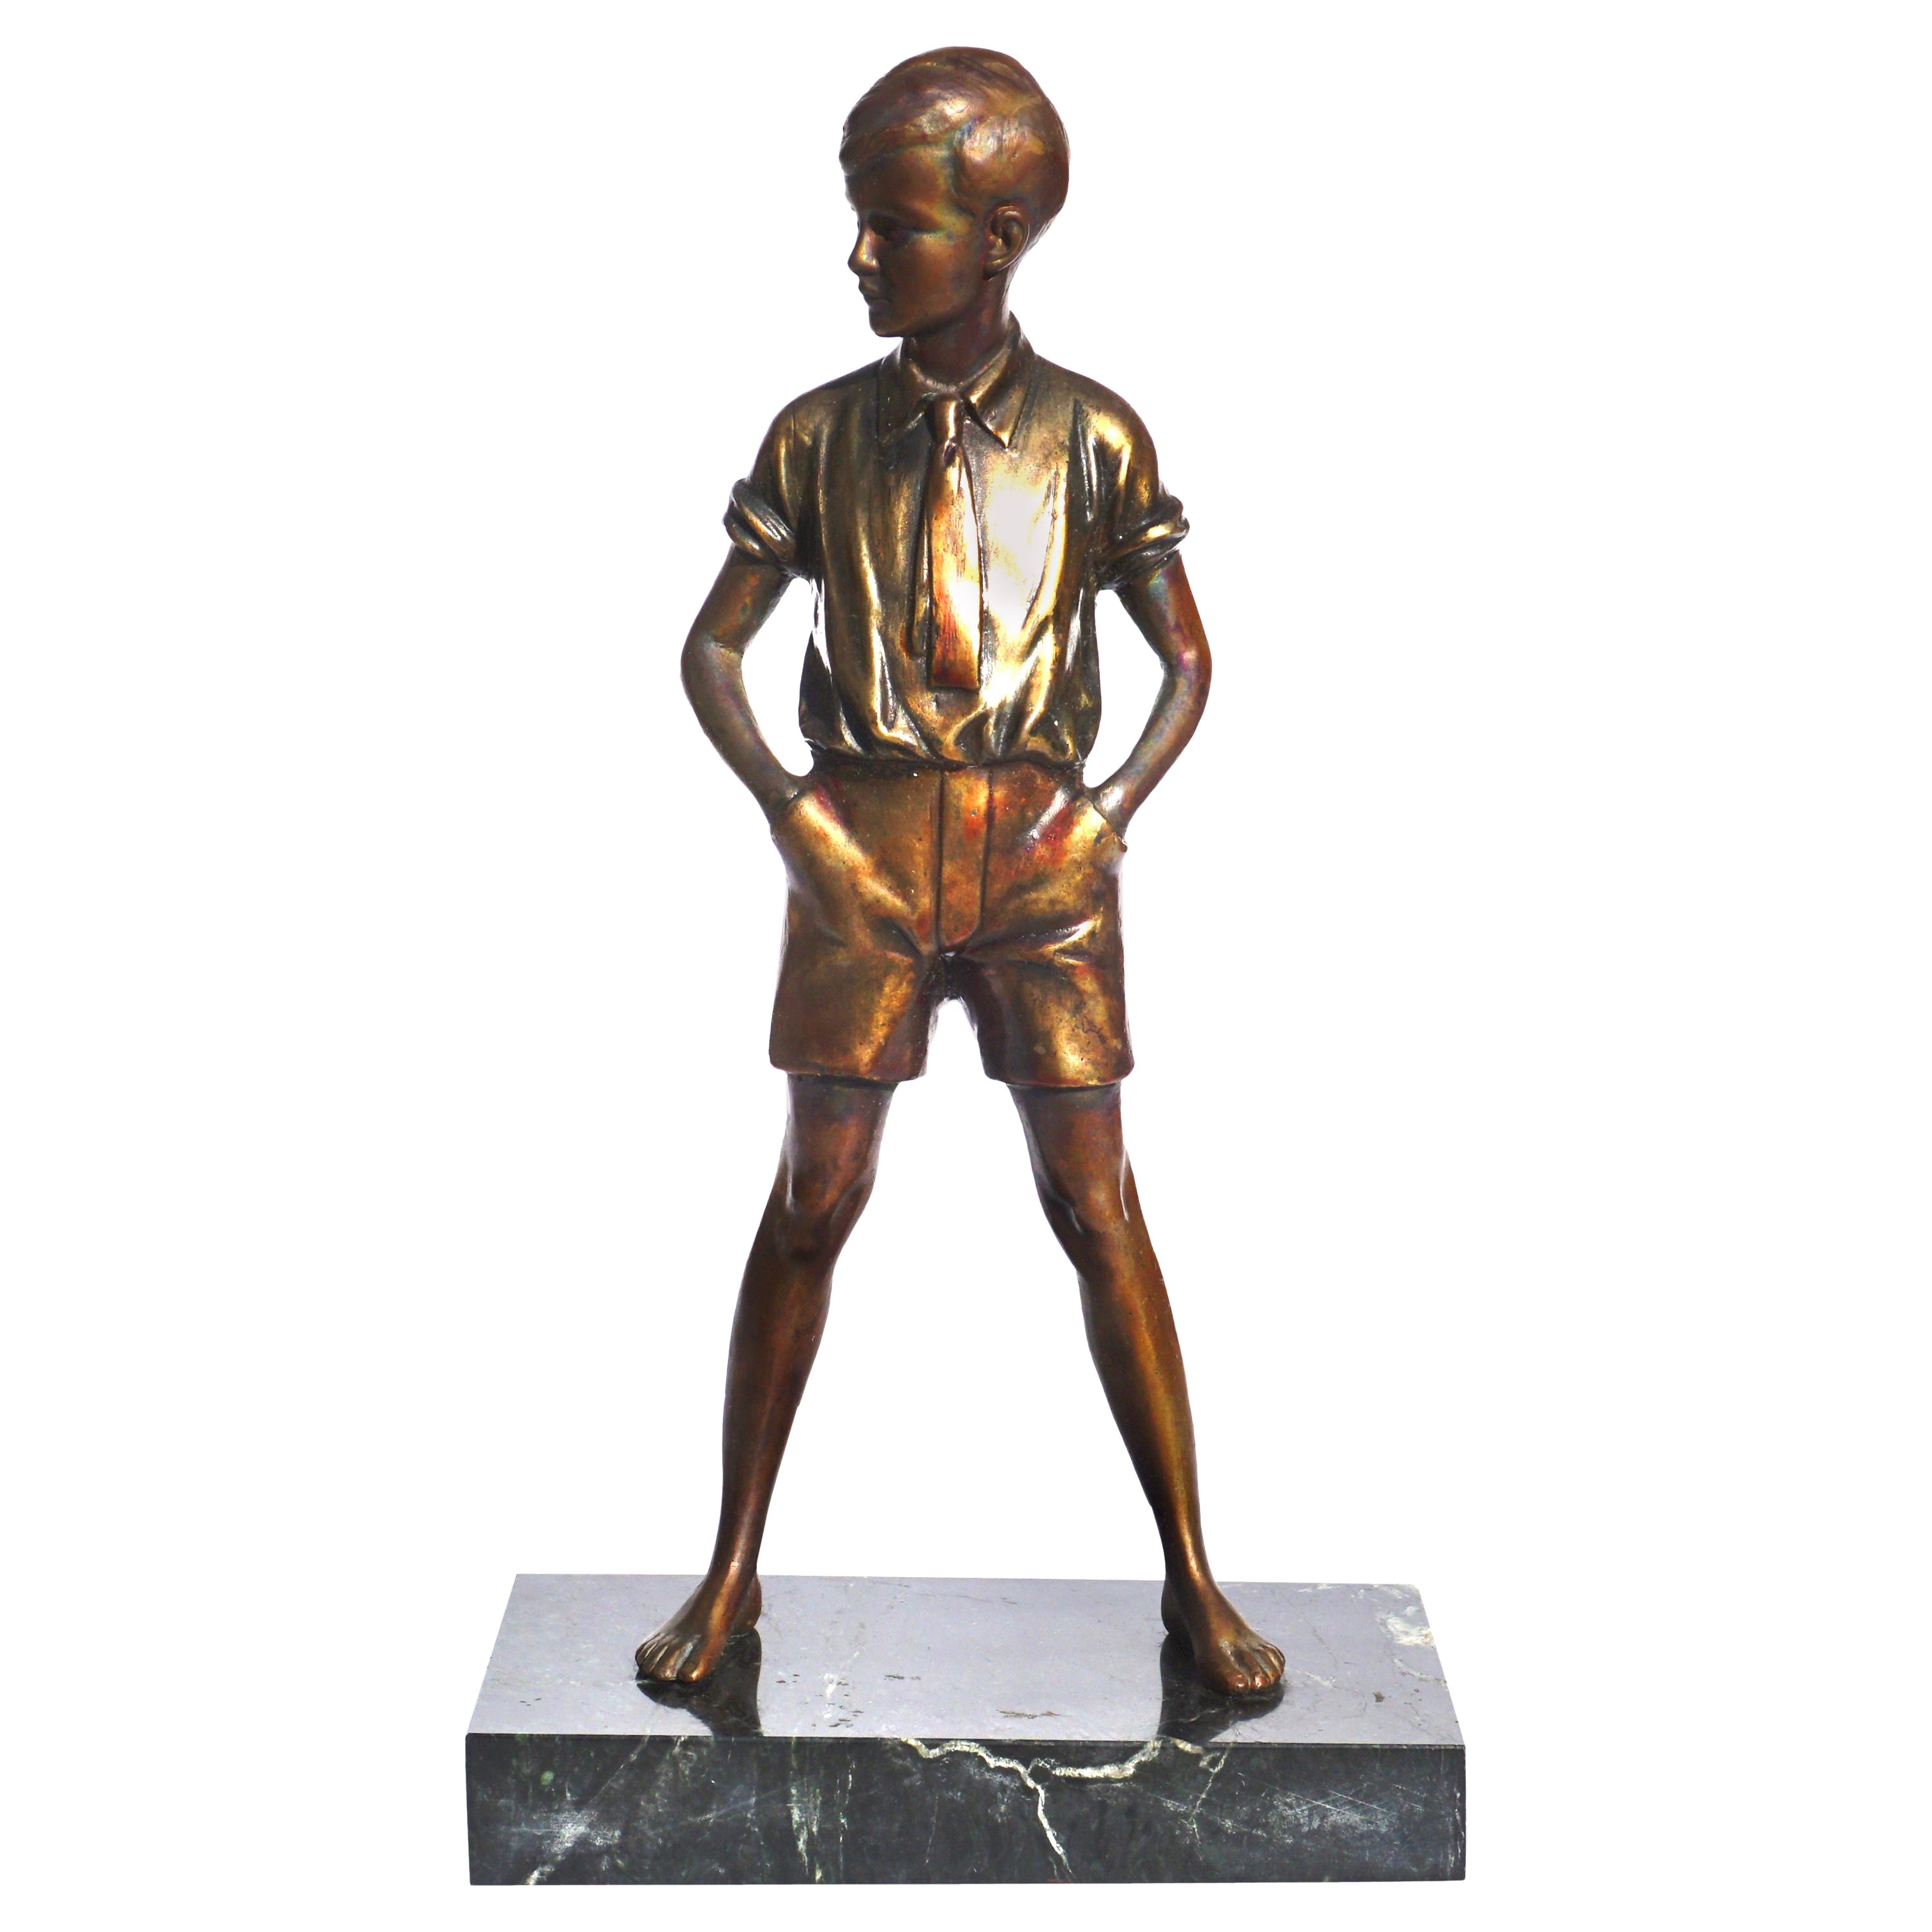 Johann Philipp Ferdinand Preiss Polychromed Bronze “Sonny Boy”